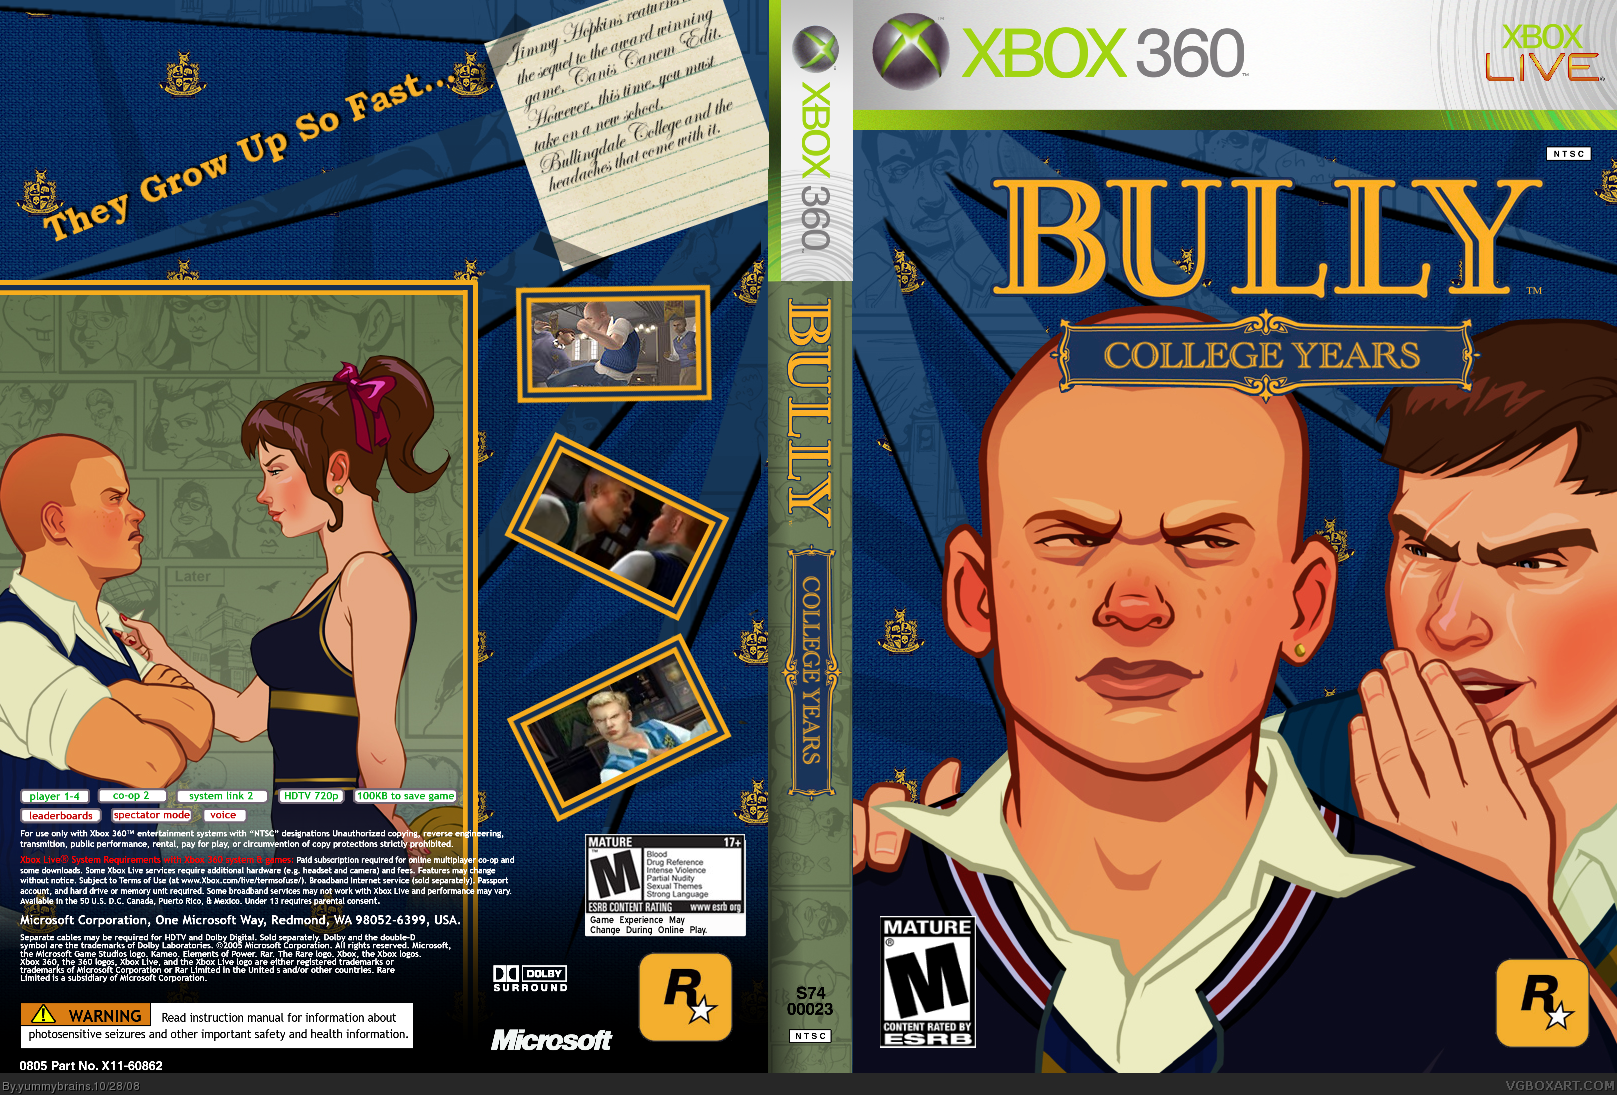 Pin on Bully scholarship edition